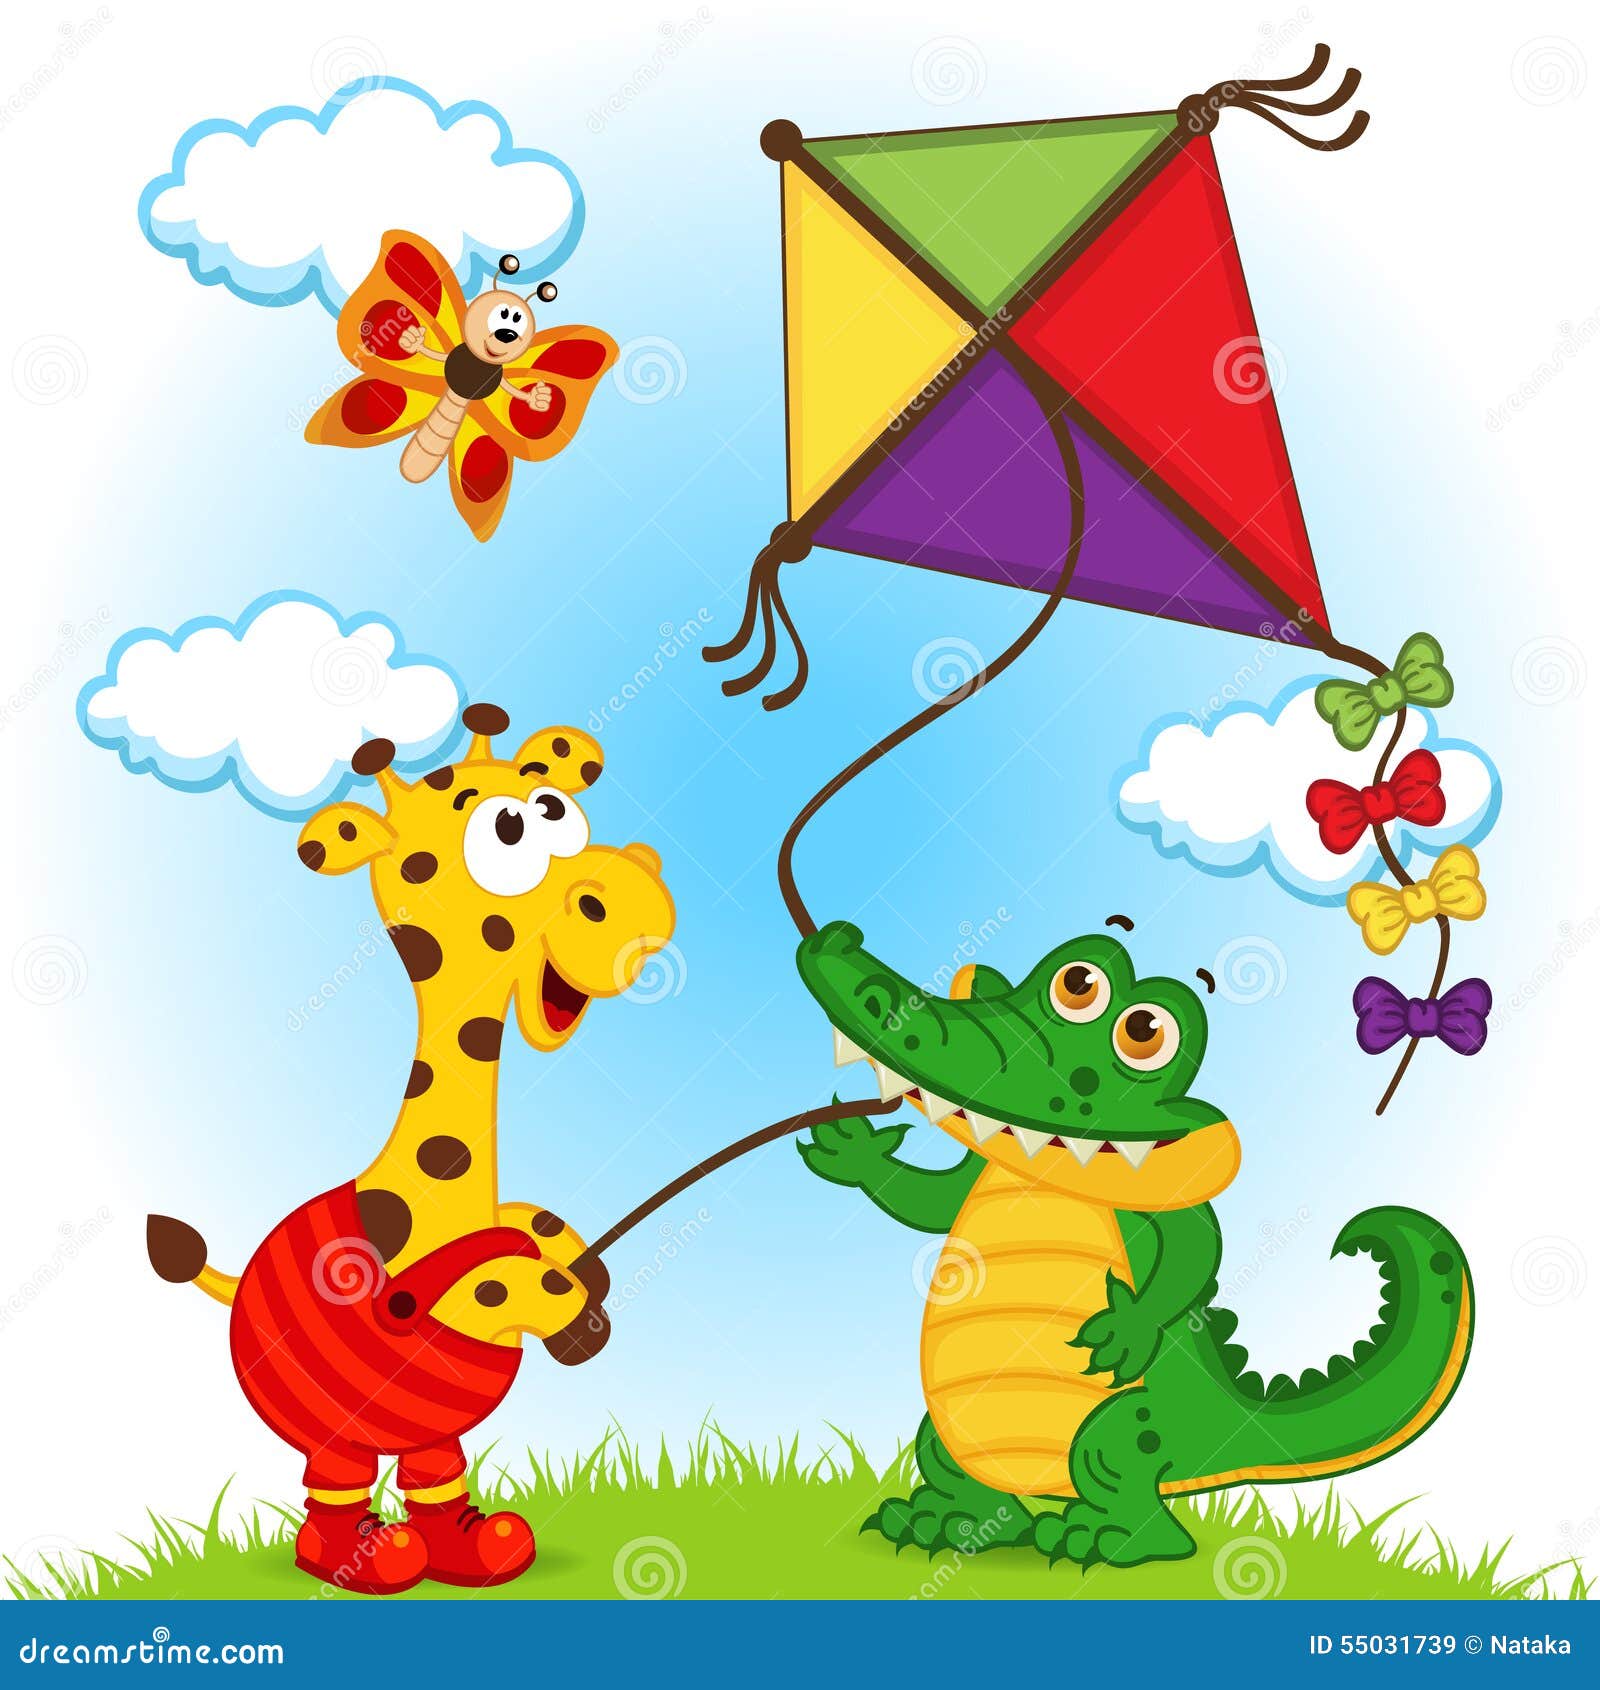 giraffe and crocodile launching a kite